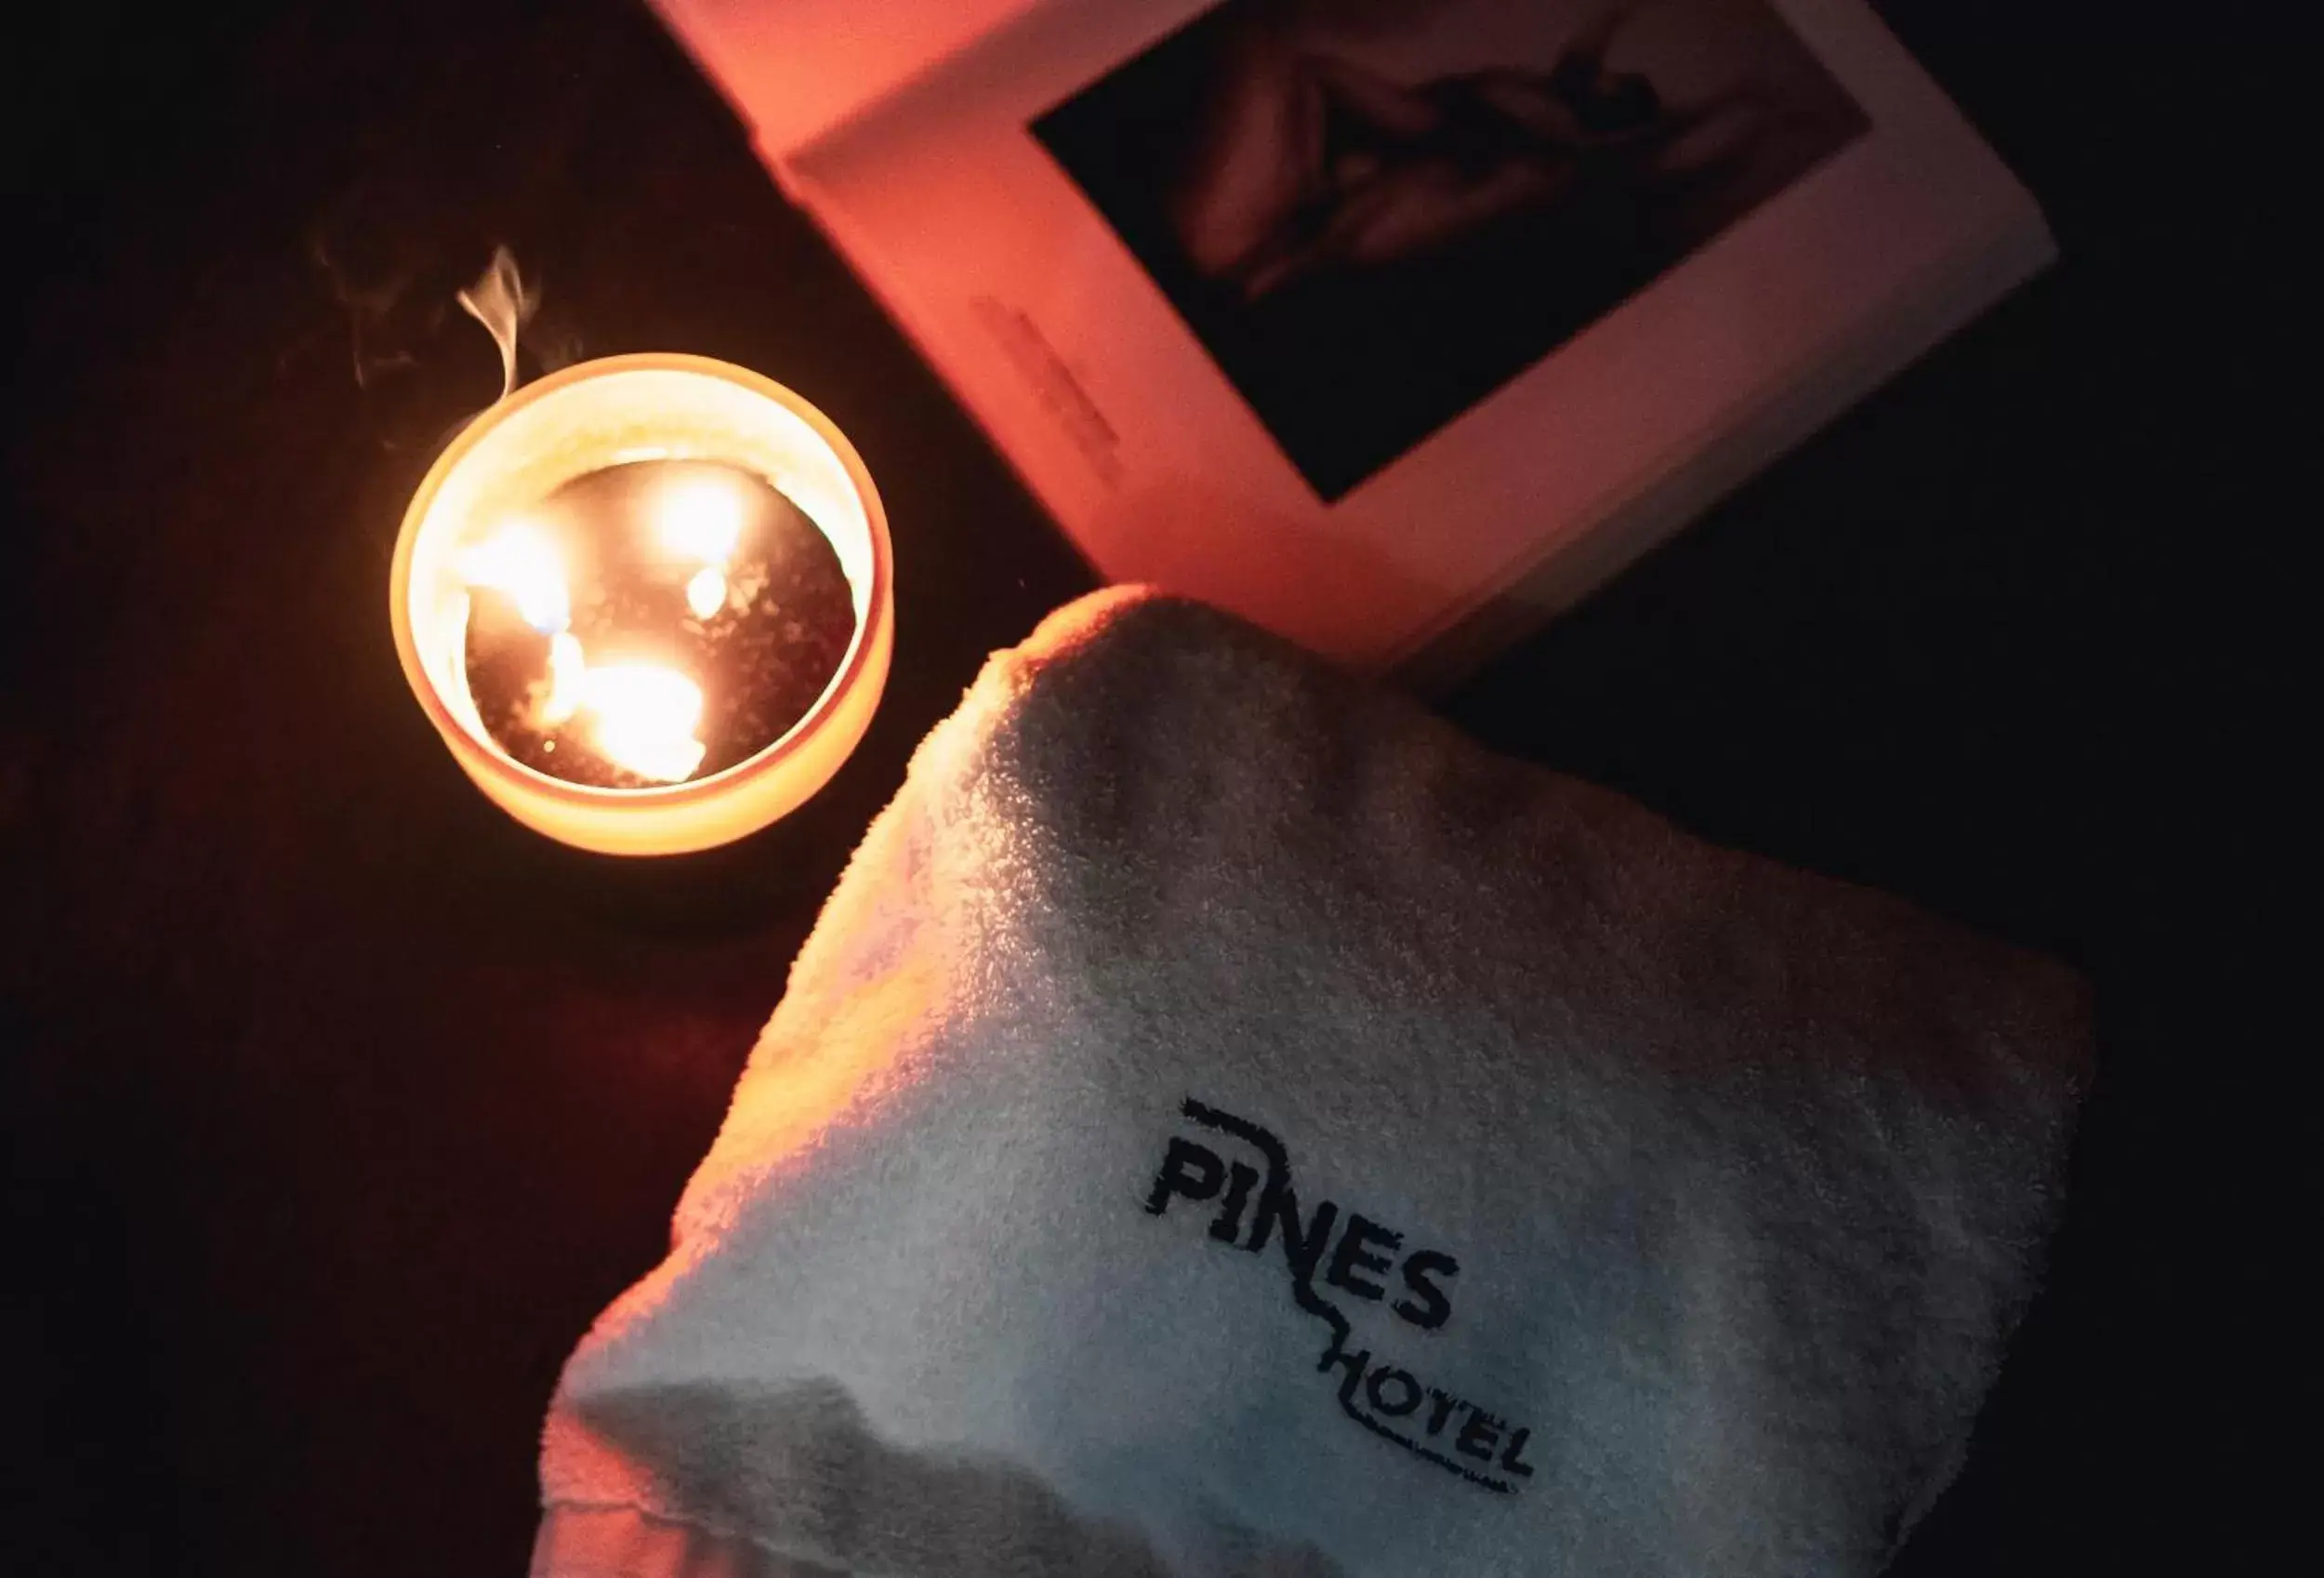 Pines Hotel